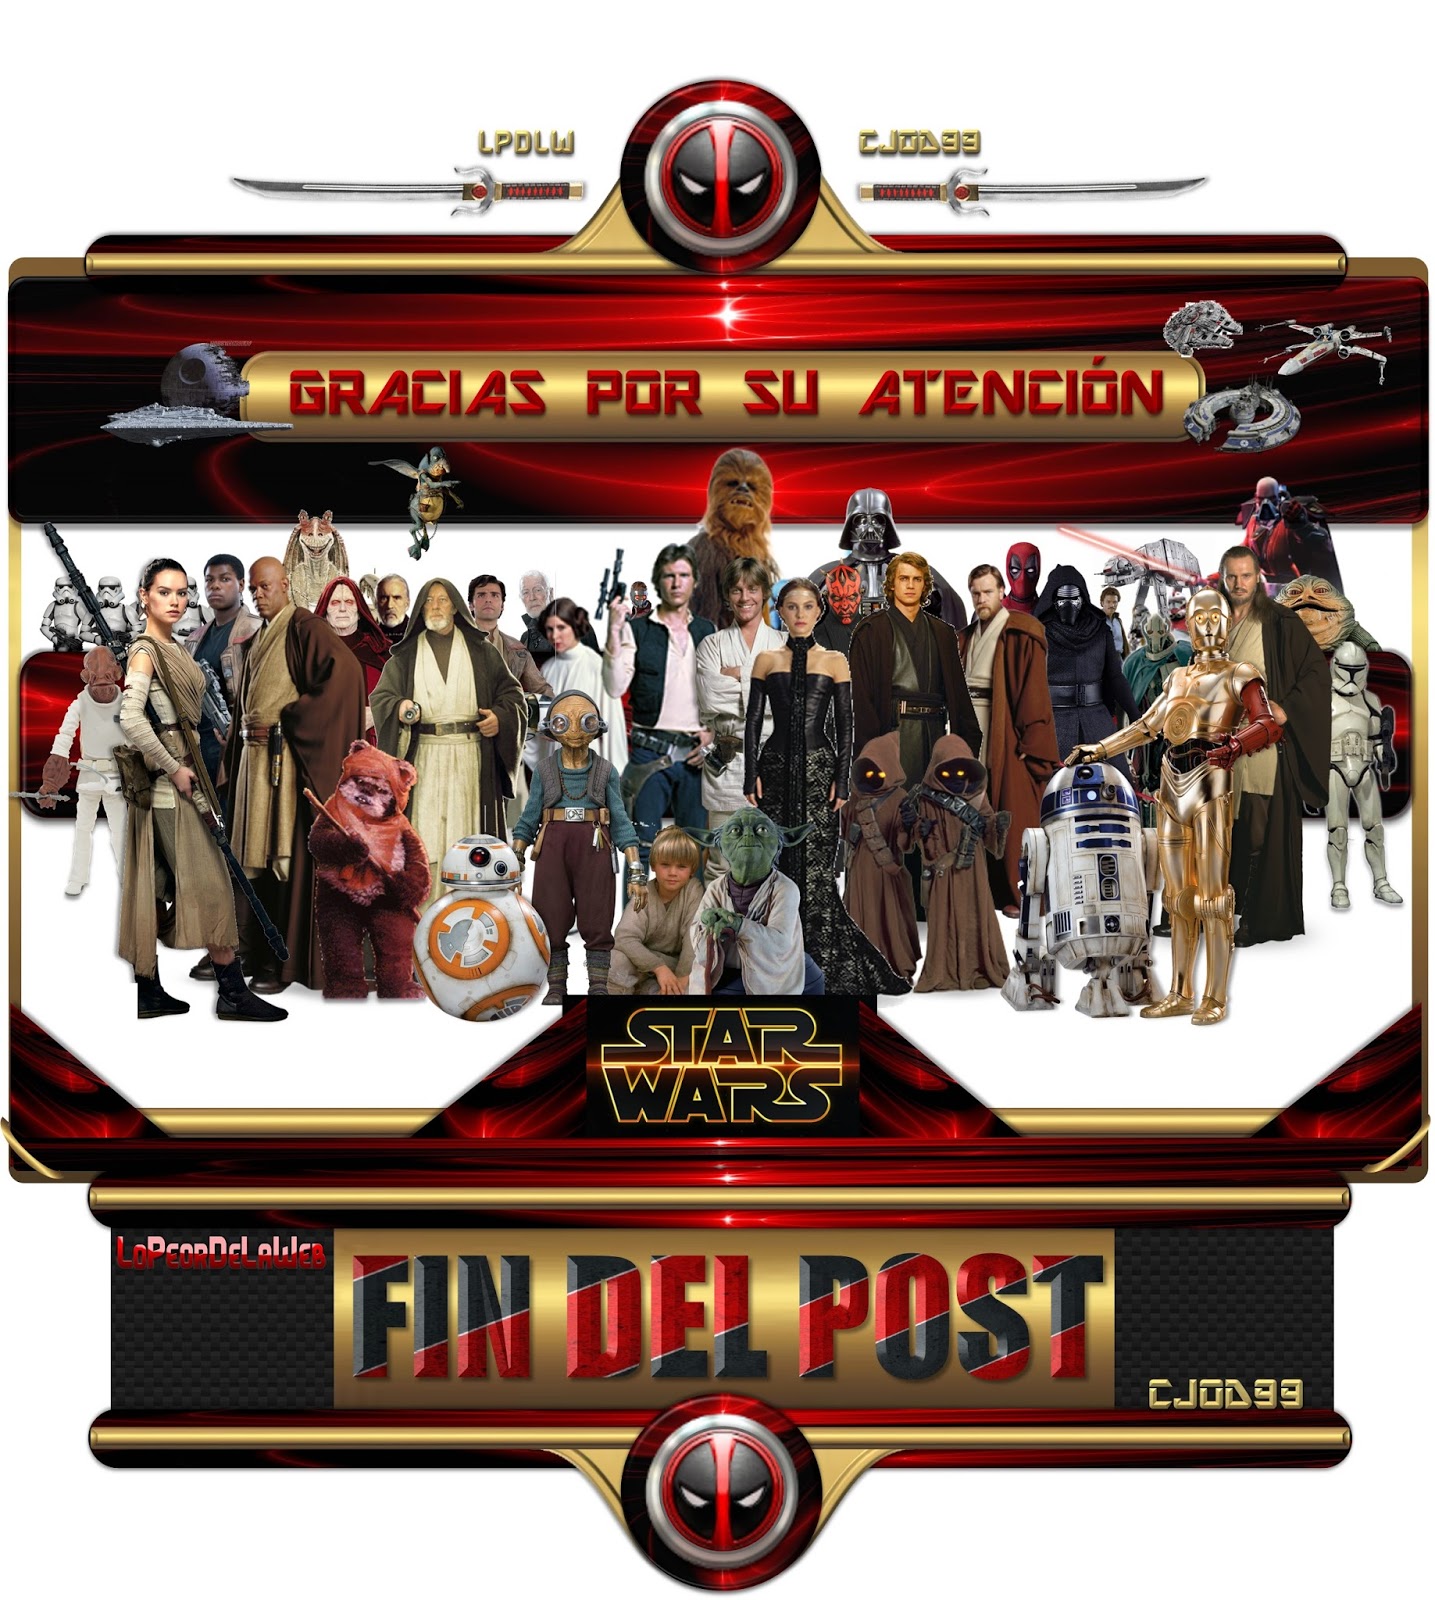 Megapost Saga Star Wars Completa 1-7 1080p Latino